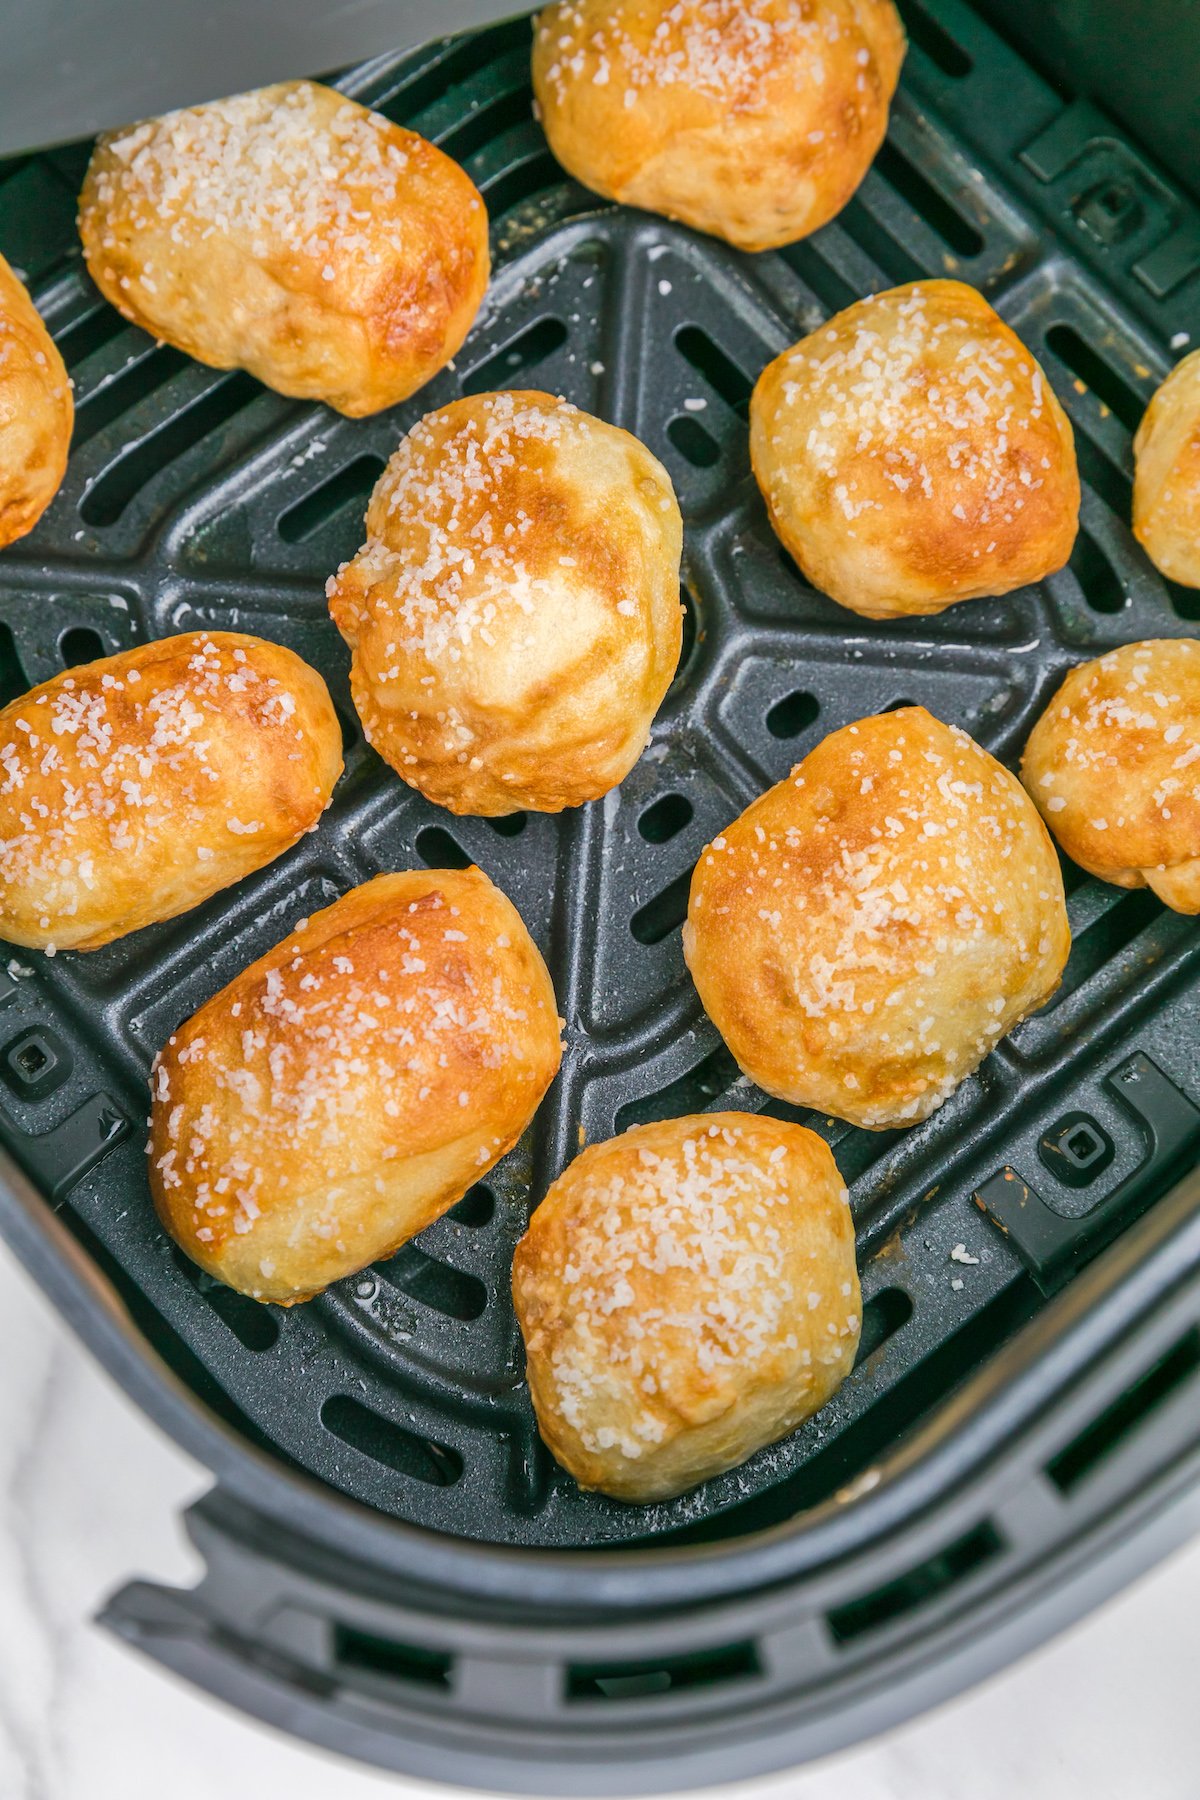 An air fryer basket with 11 cooked pretzel bites inside.